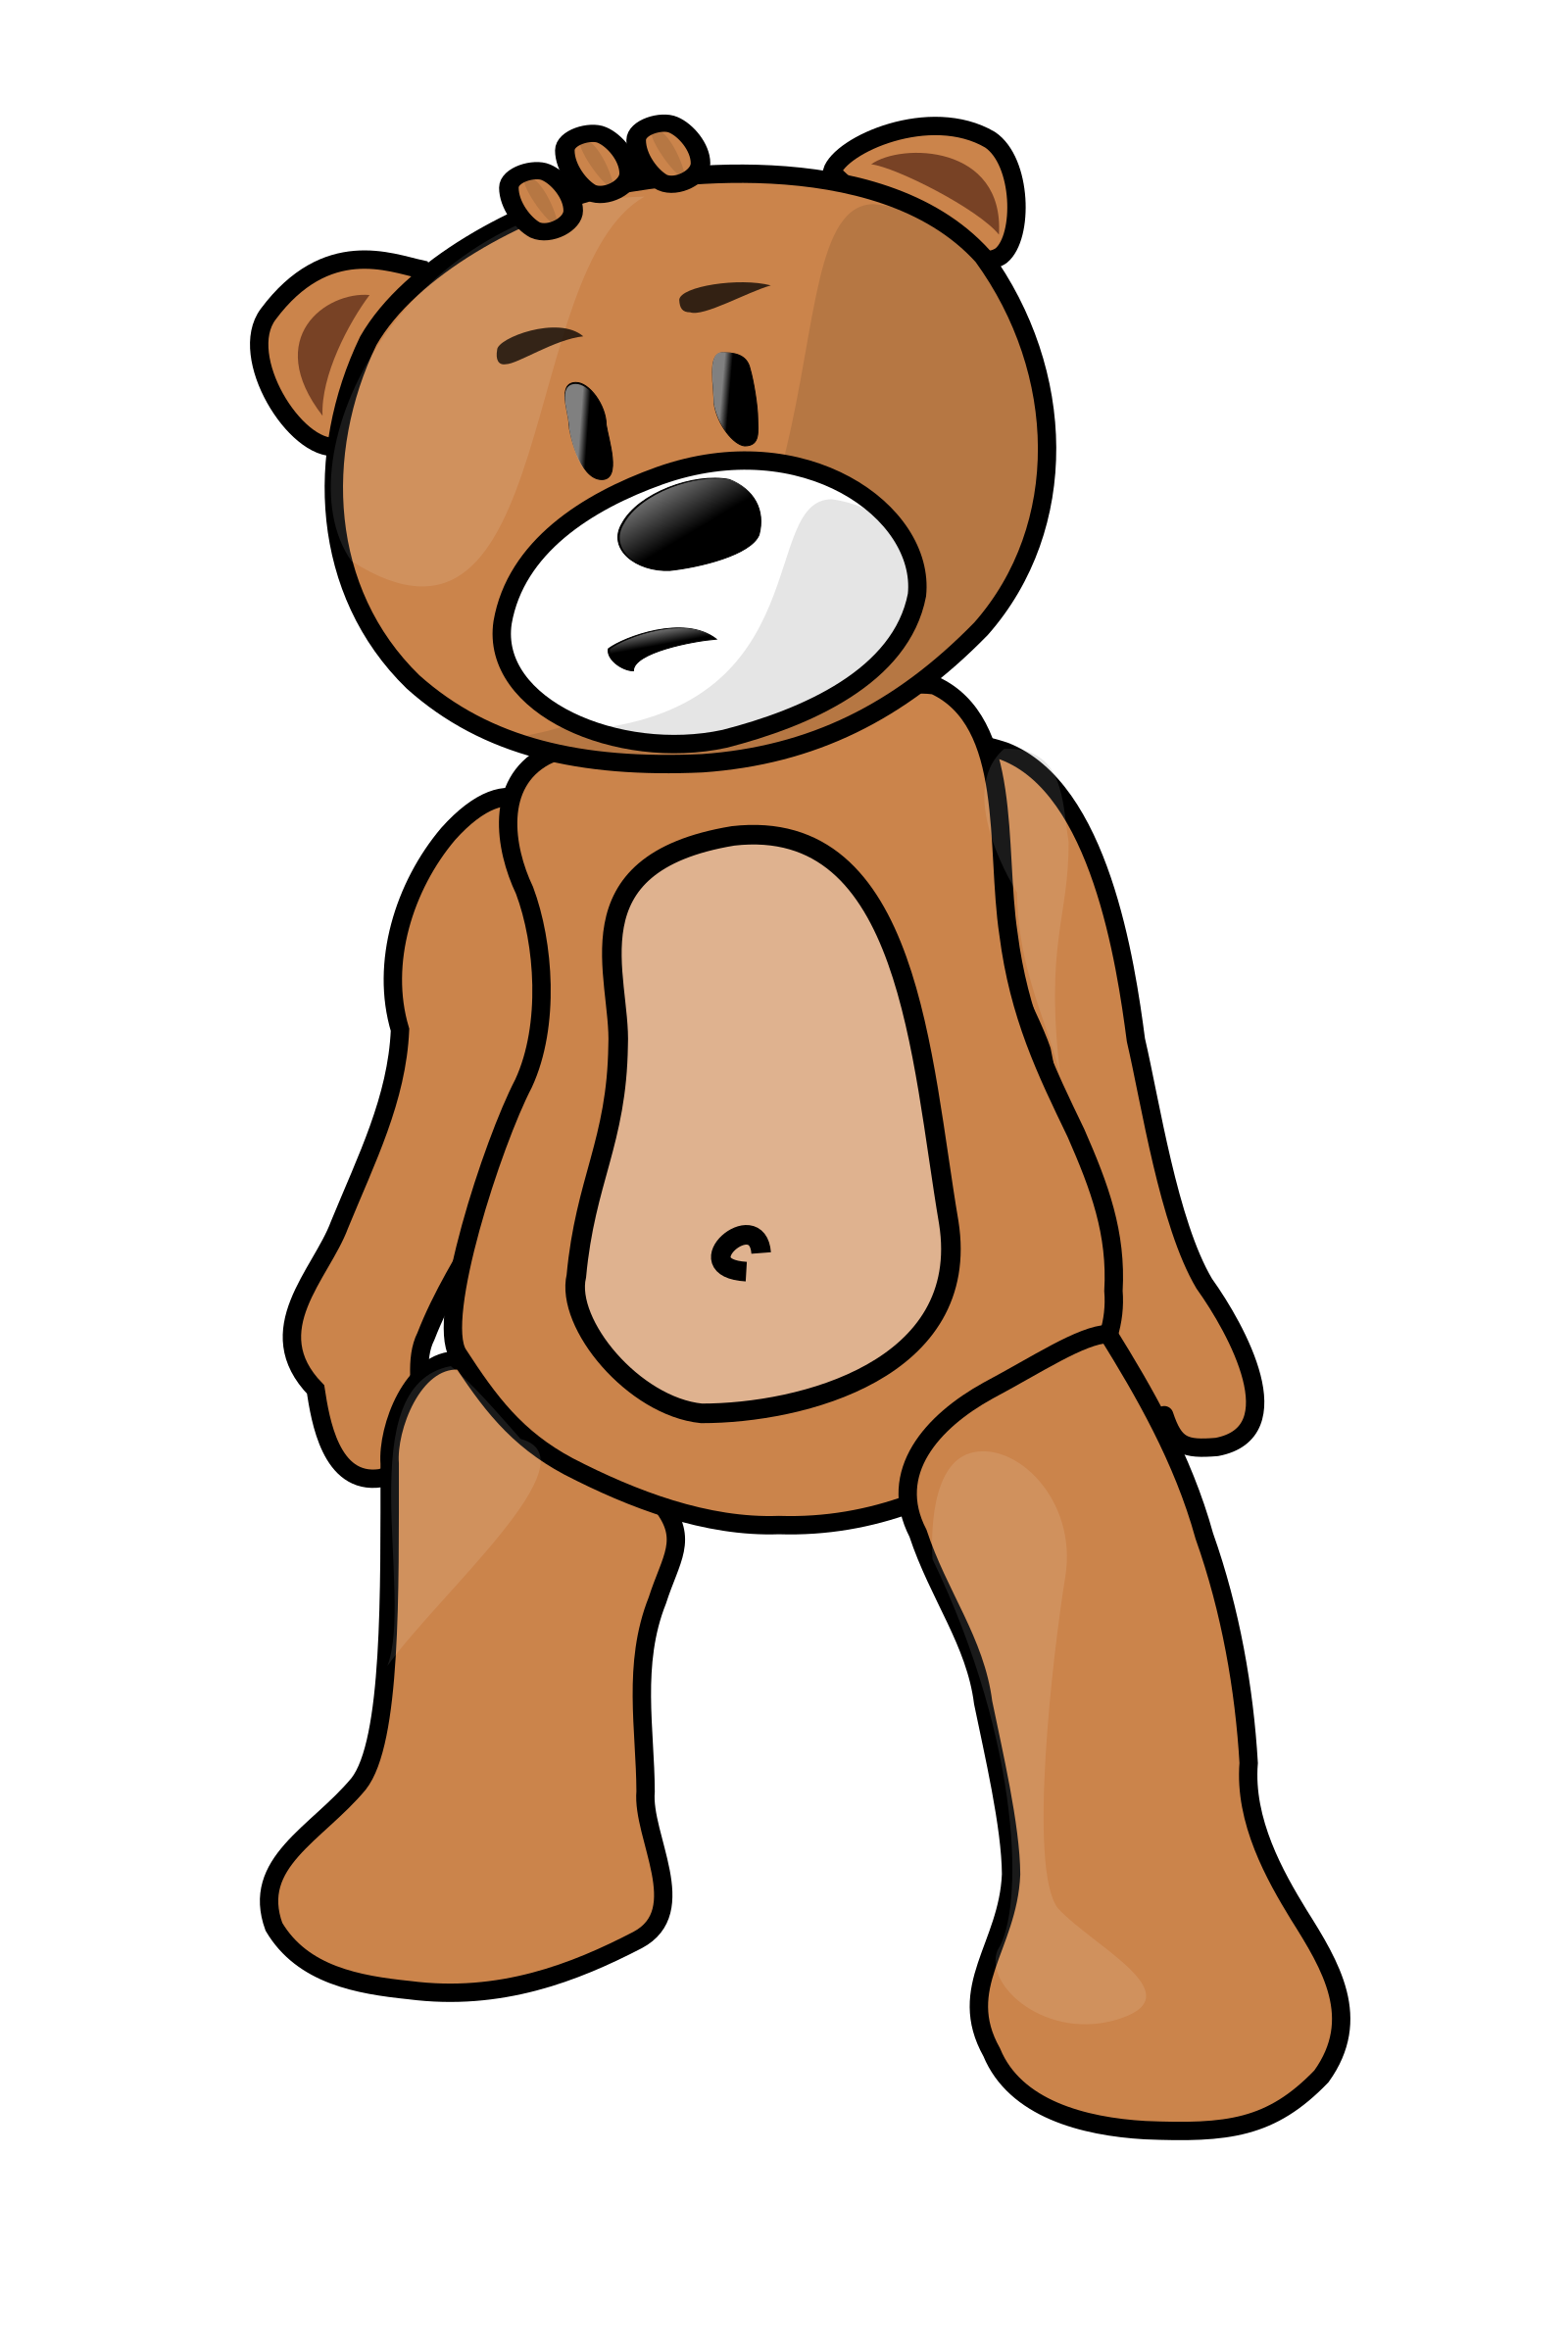 Simple Teddy Bear PNG Clip arts.